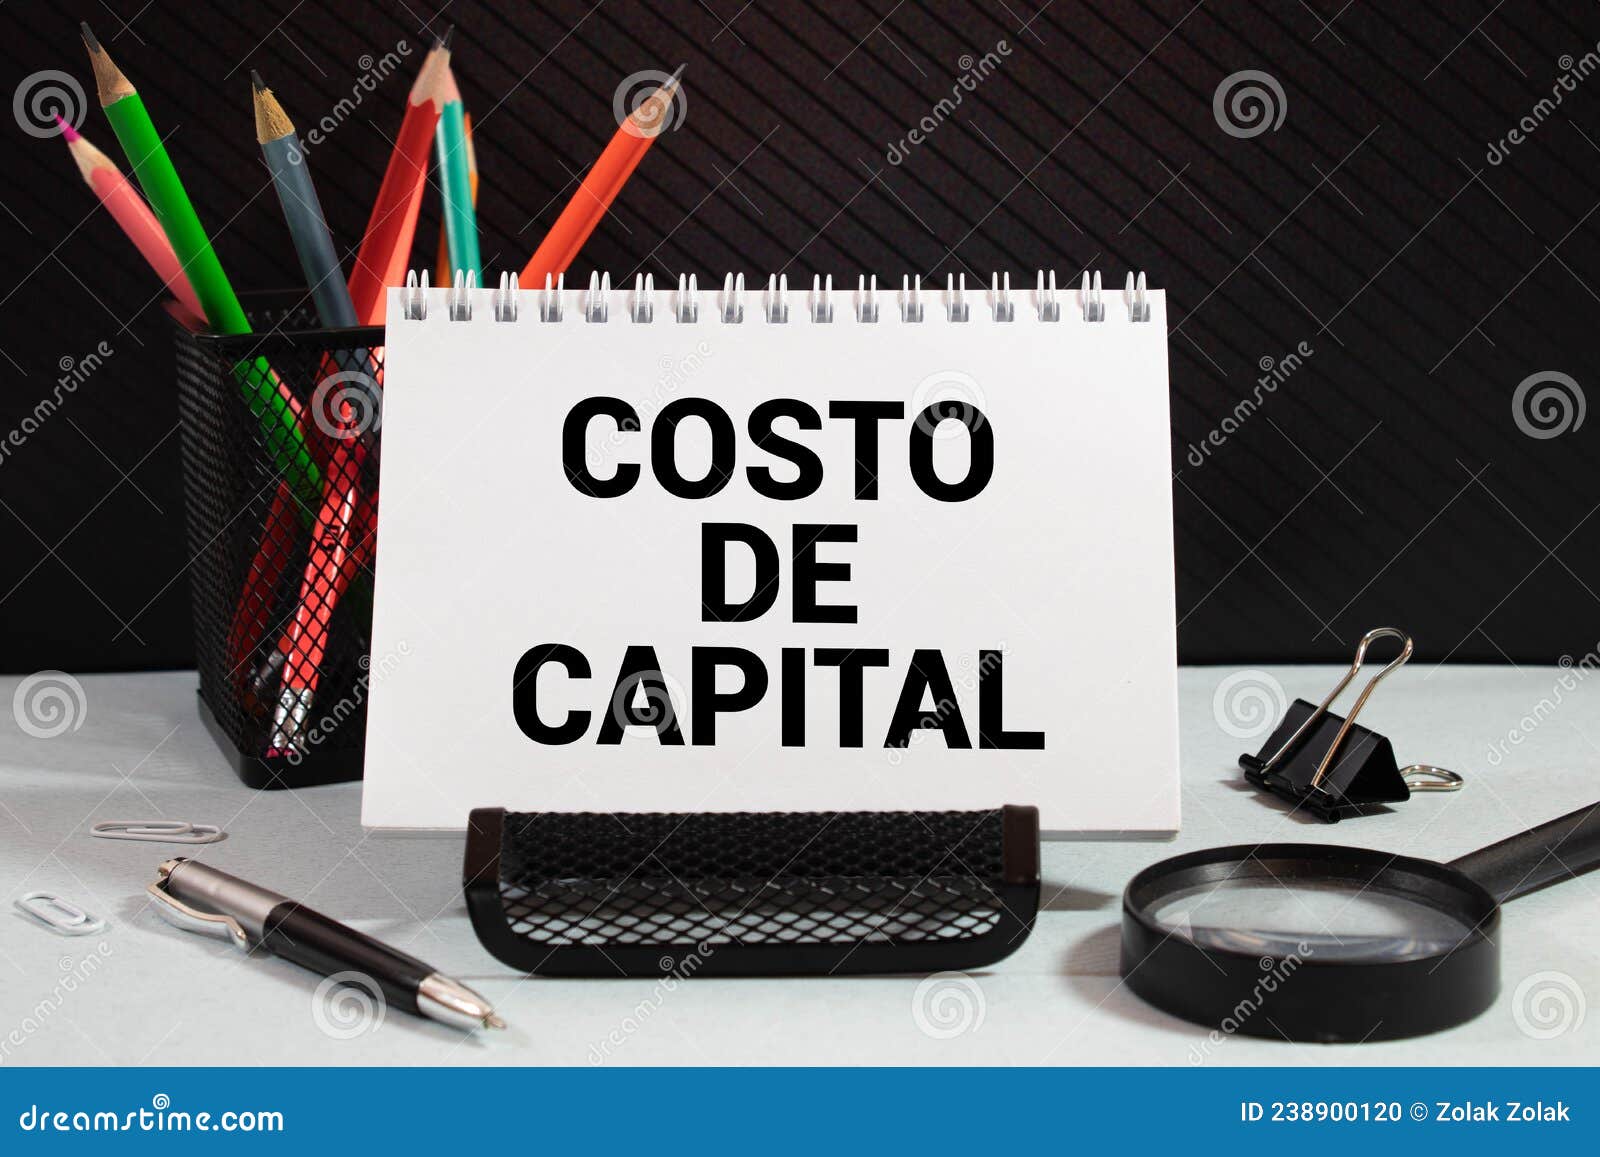 text costo de capital on white paper, business concept